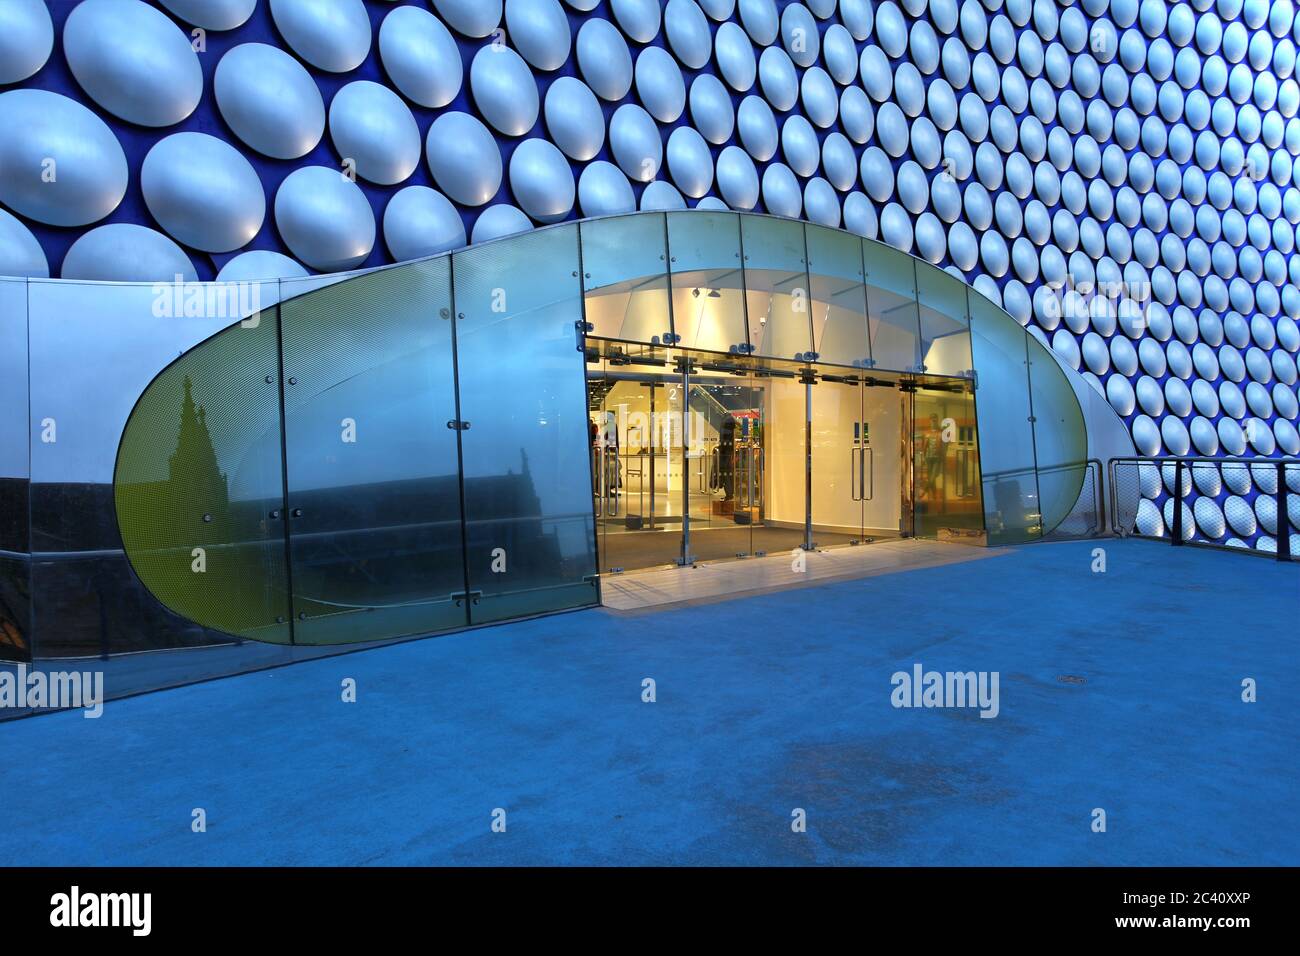 Birmingham, UK - January 30, 2013 - Architectural detail of the entrance to the landmark building Selfridges Department Store in Birmingham, UK at twi Stock Photo